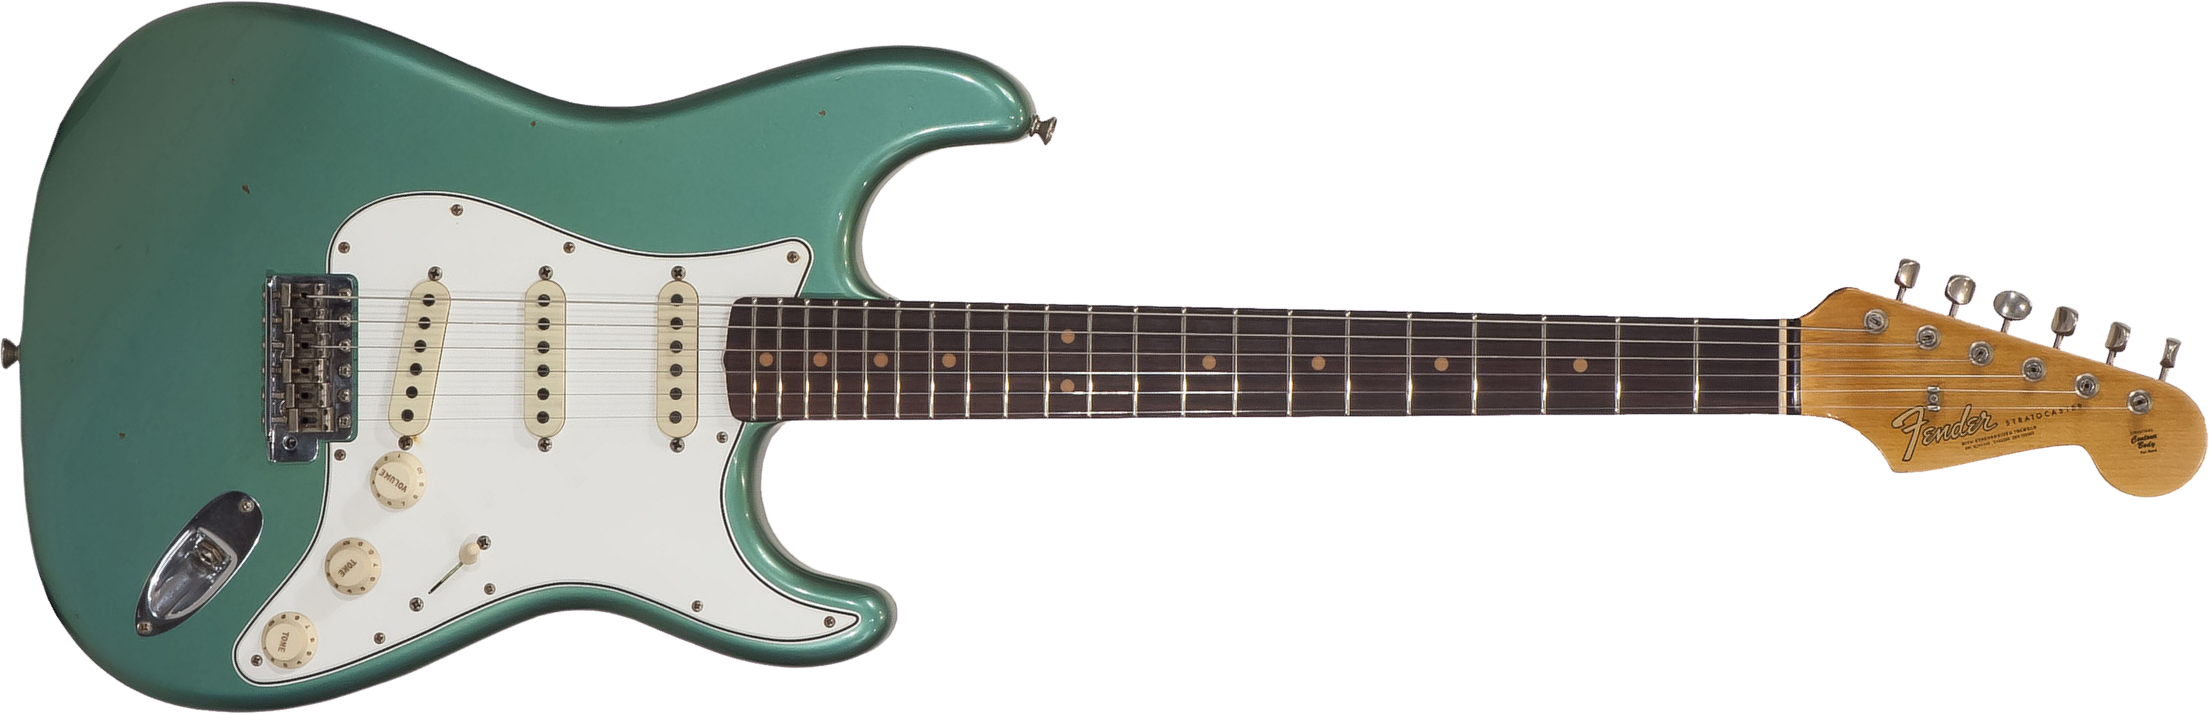 Fender Custom Shop Strat 64 Ltd 2018 Rw - Journeyman Relic Sage Green Metallic - Guitarra eléctrica con forma de str. - Main picture